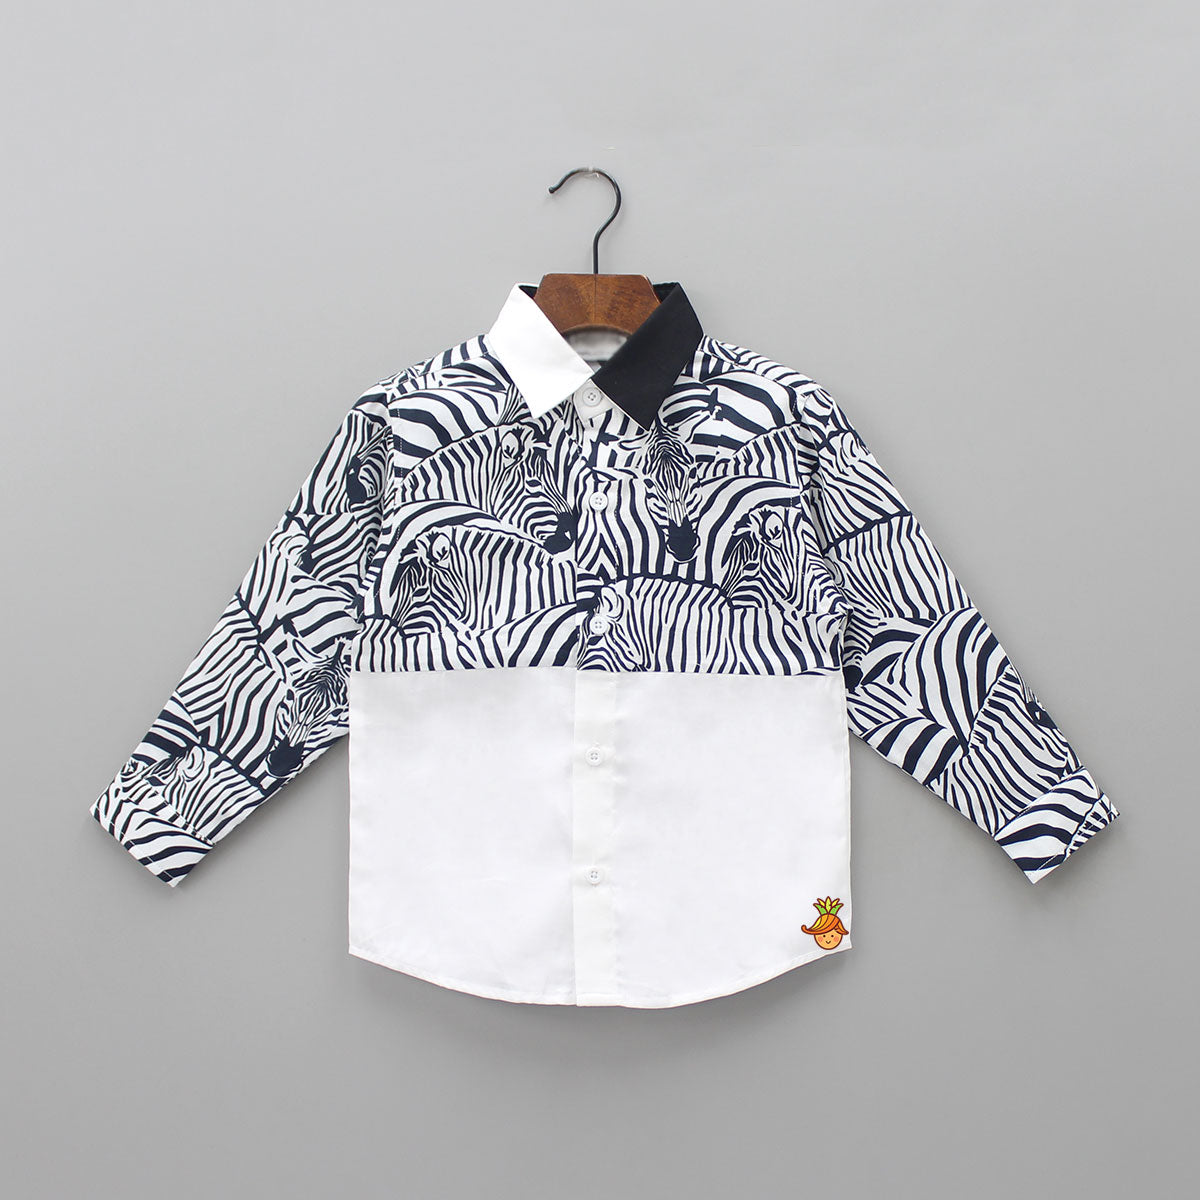 Classic Zebra And White Panelled Shirt